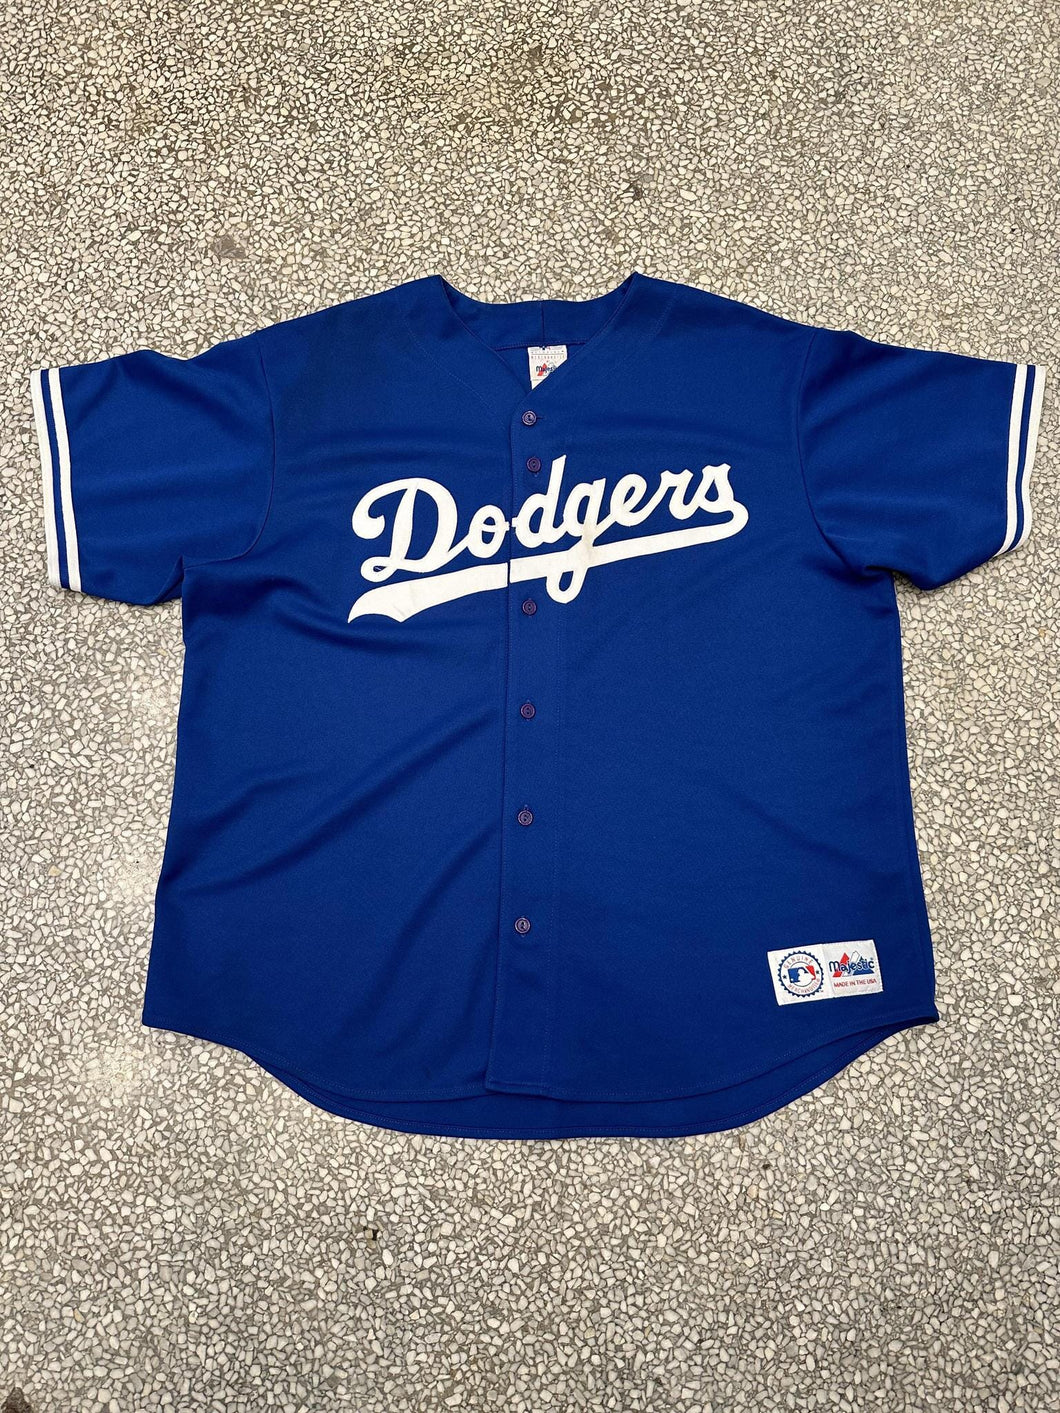 LA Dodgers Vintage 90s Majestic Baseball Jersey Blue ABC Vintage 